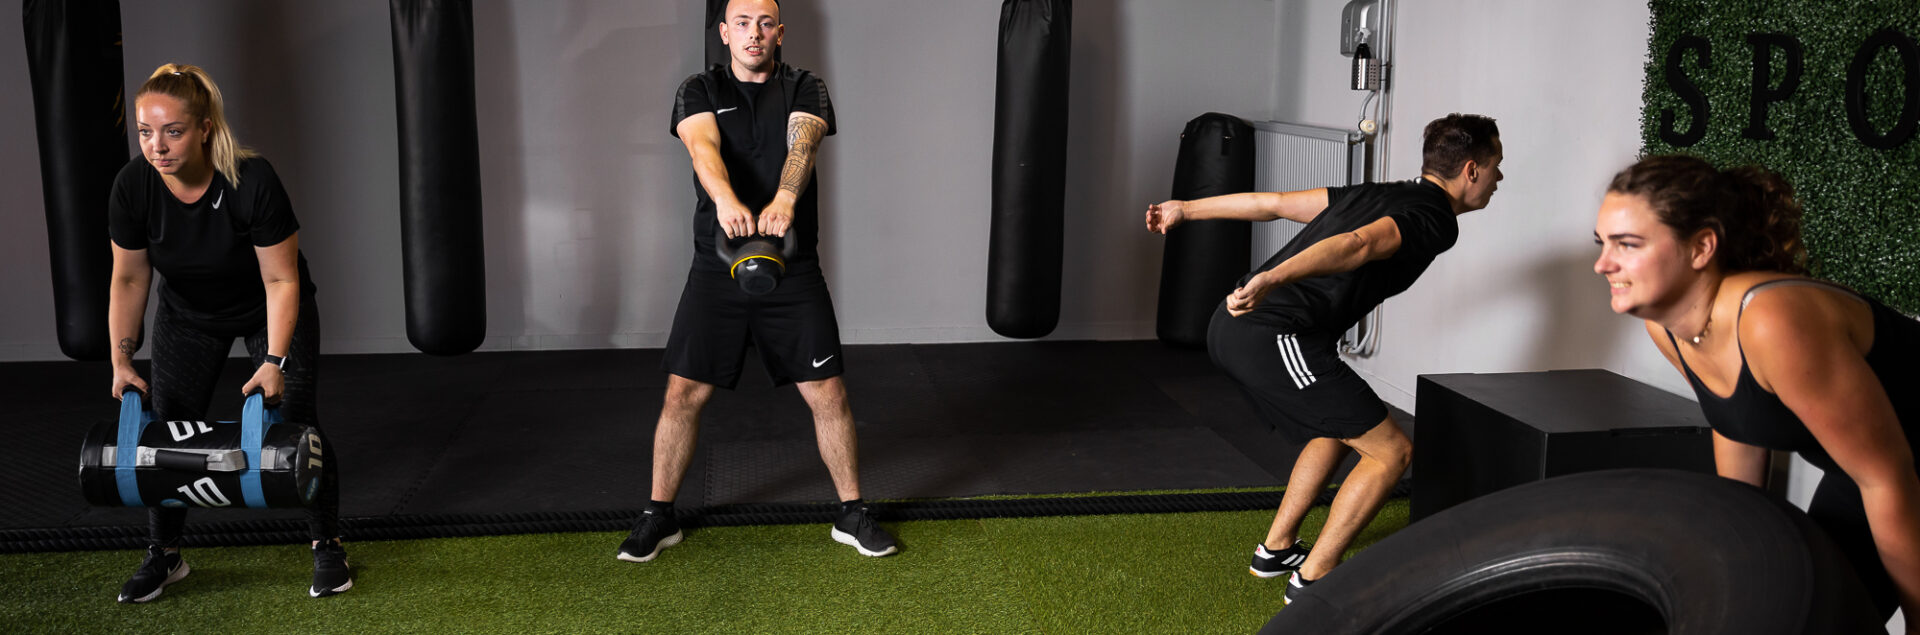 Sportschool 's-Gravendeel | Personal Training | Bootcamp | Fitness